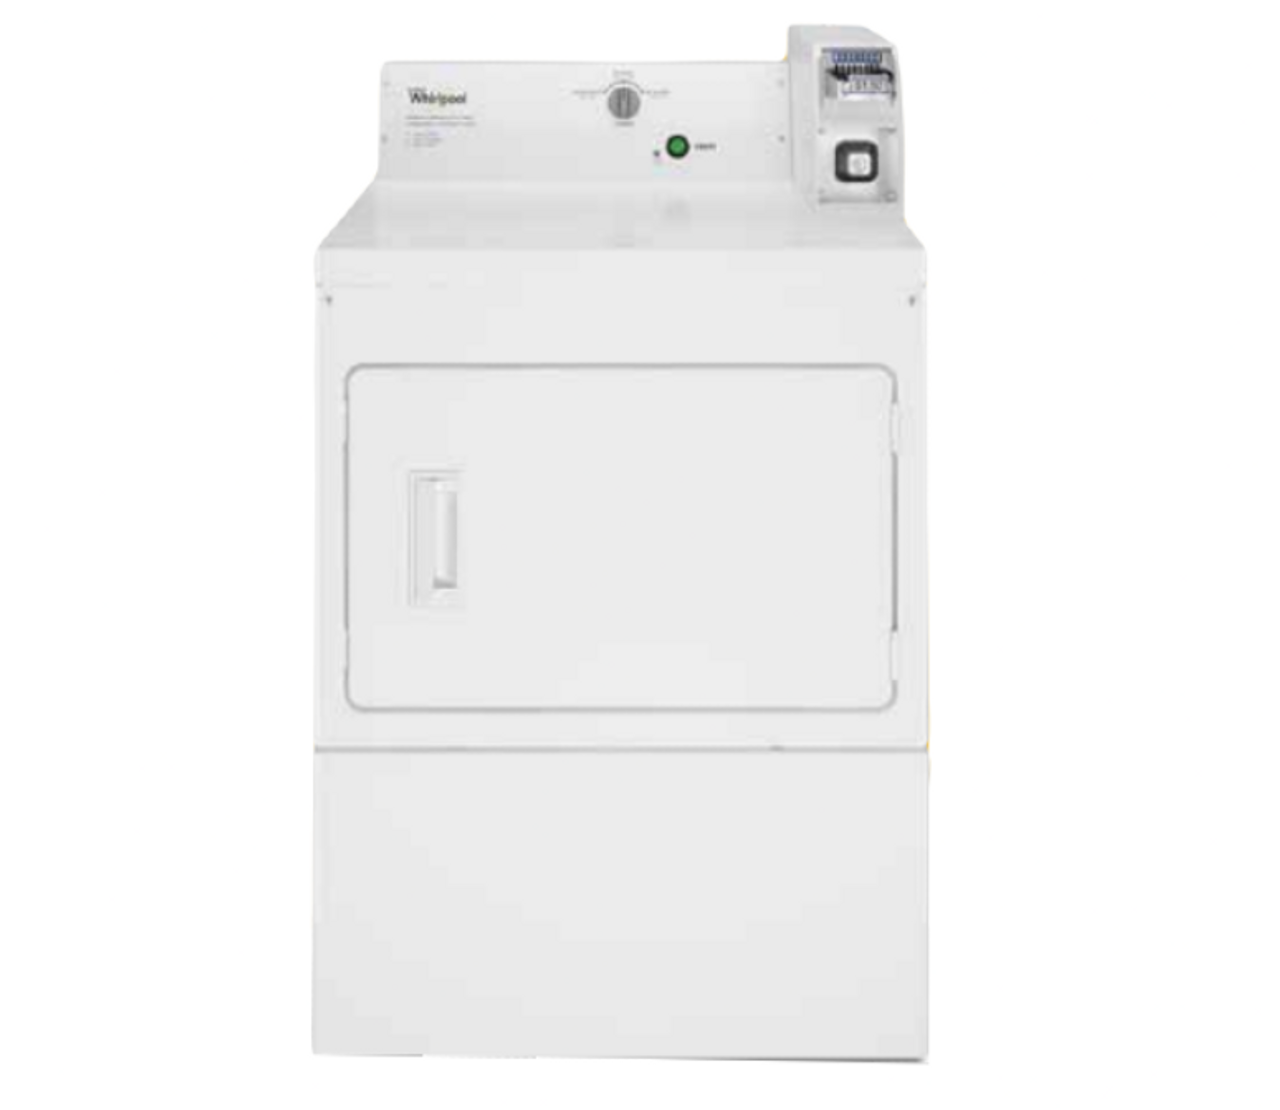 How Dexter Laundry Equipment Increases Efficiency